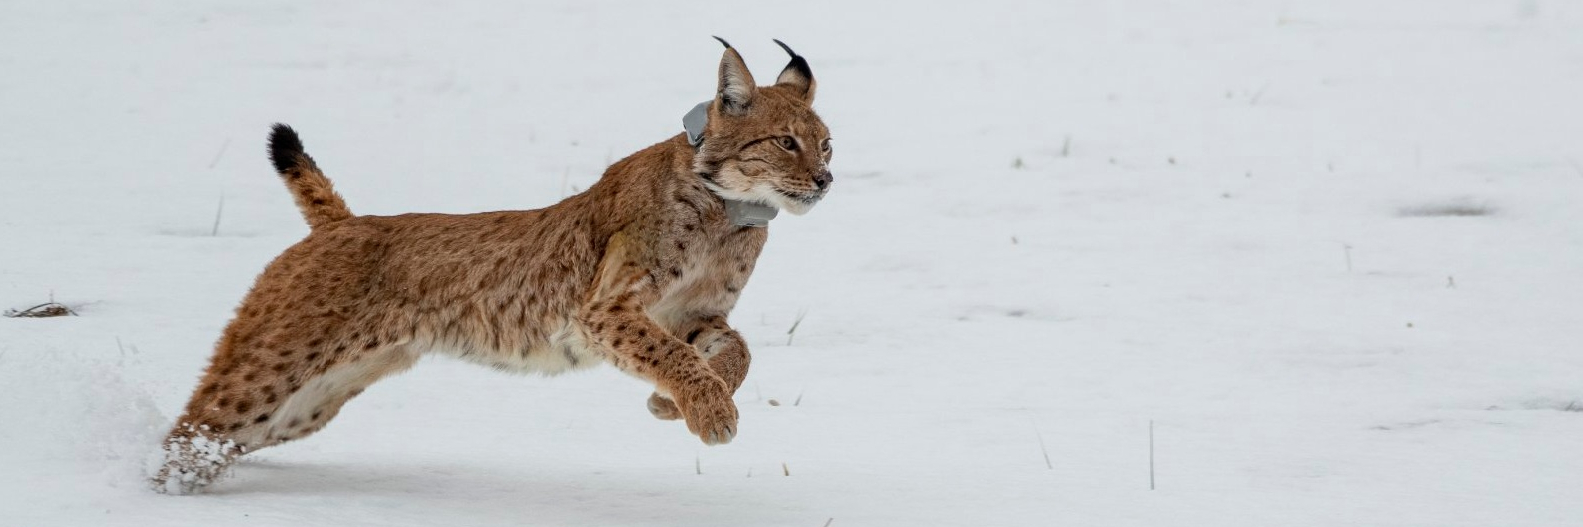 Lynx jumping through snow